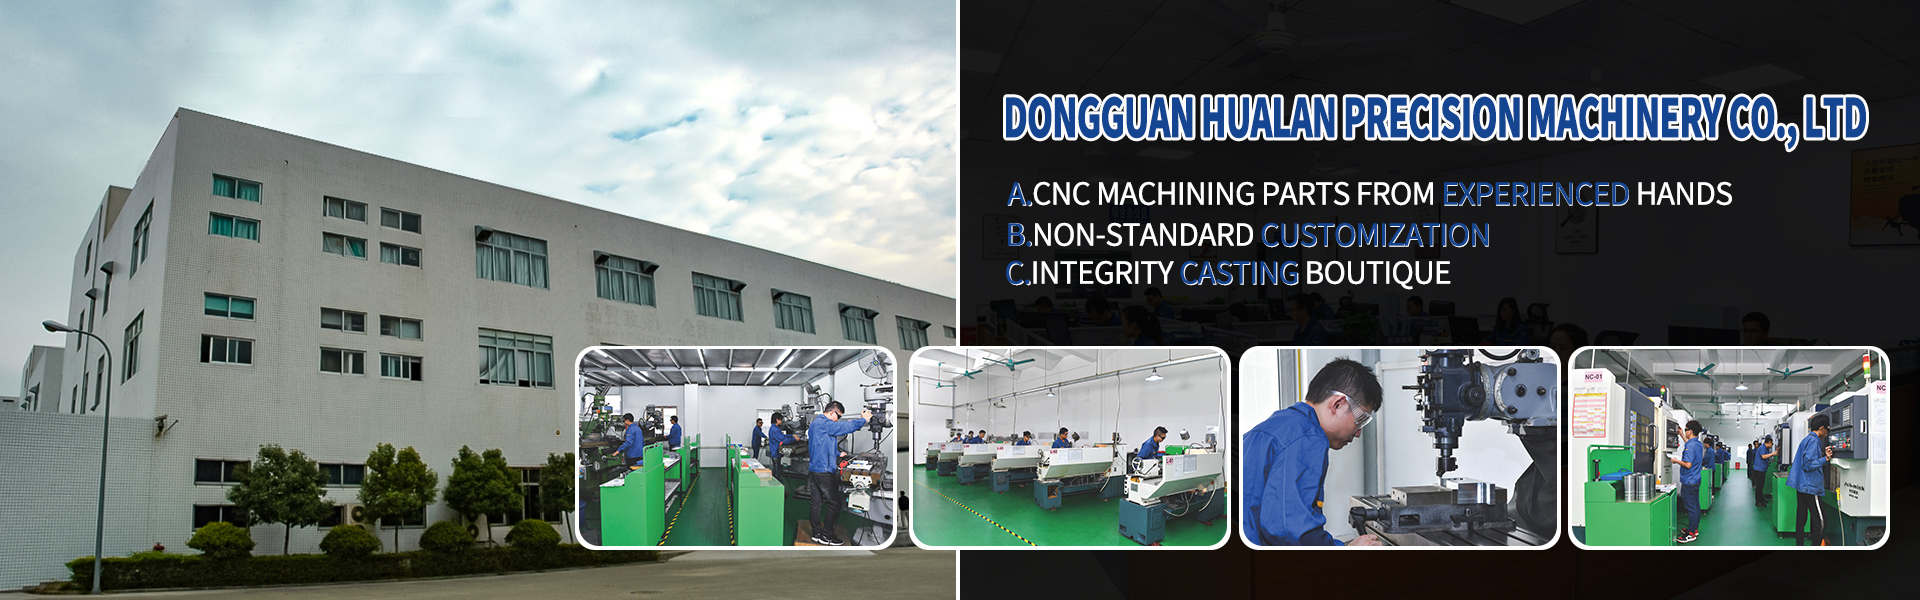 CNC 가공 부품, 츄딩 및 밀링, 라인 커팅,Dongguan Hualan Precision Machinery Co., LTD